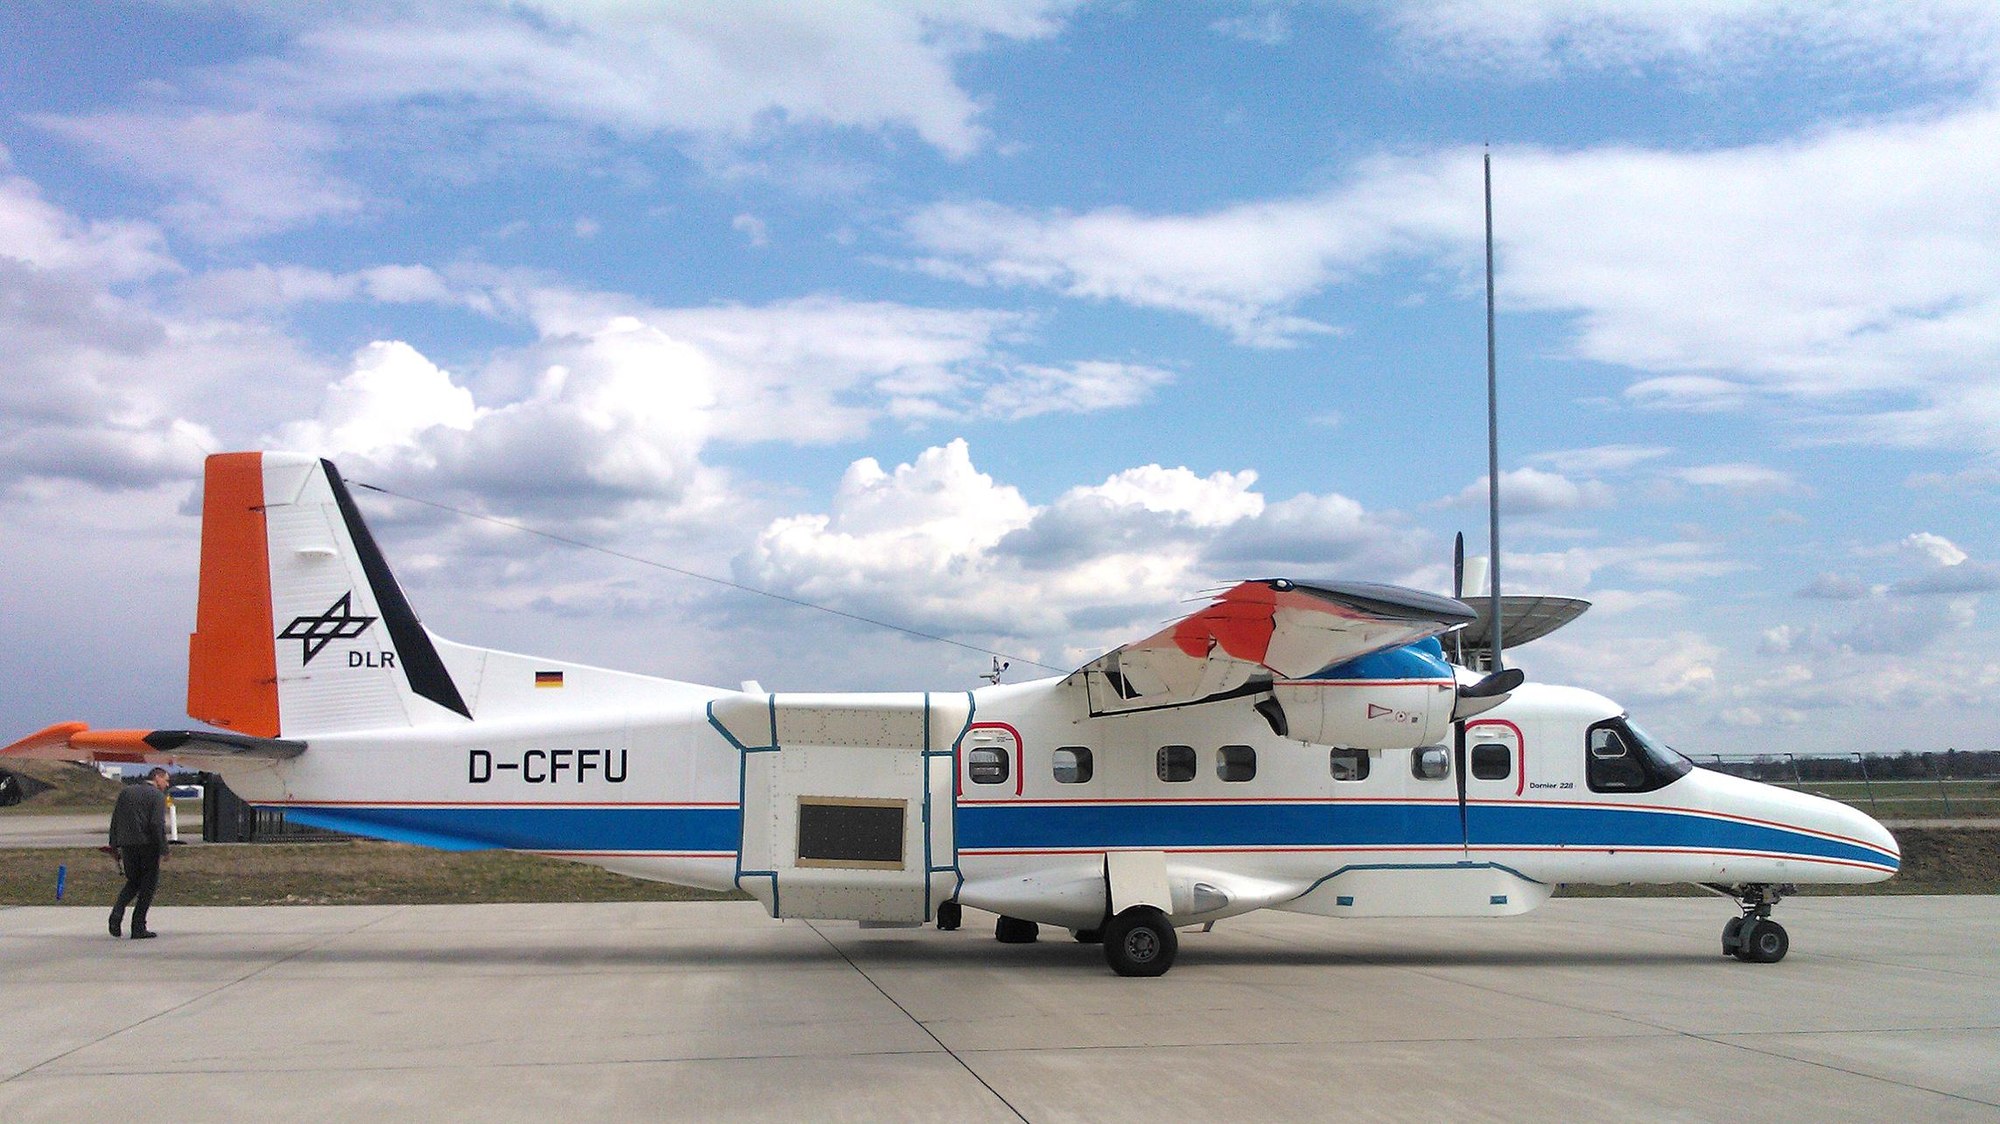 DLR's Dornier DO 228 research aircraft preparing for the measurement campaign